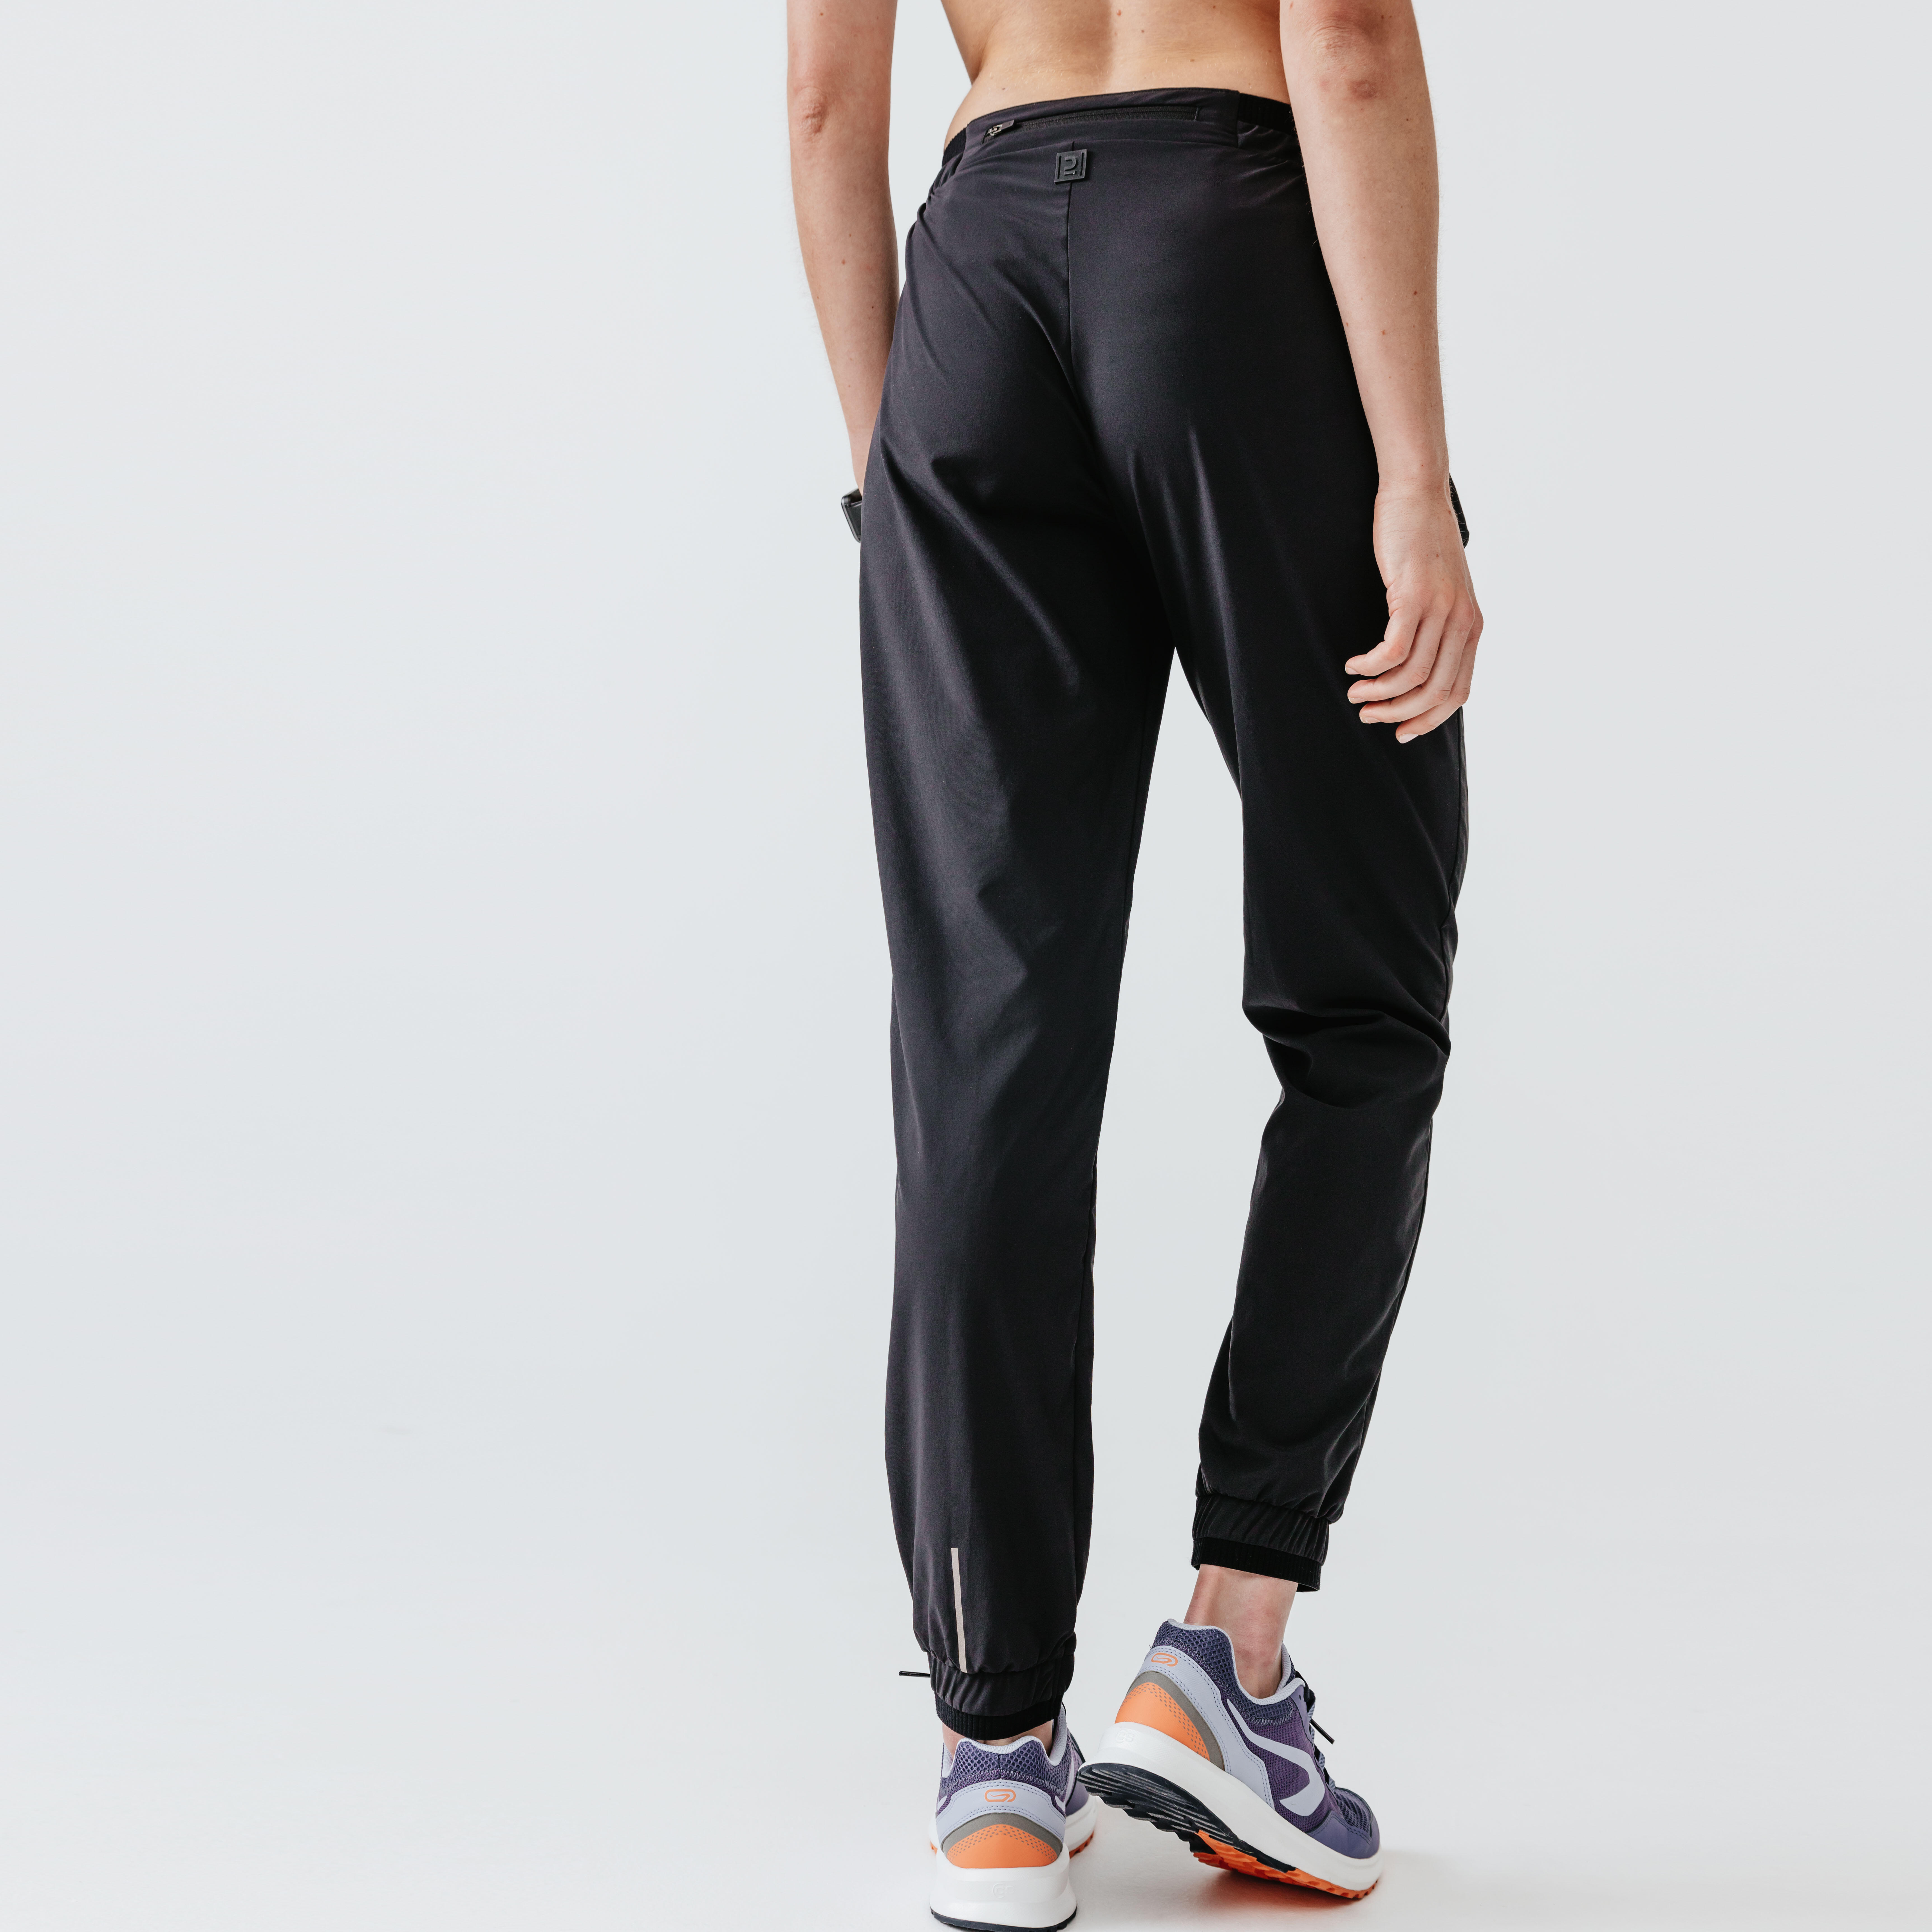 Womens breathable joggingrunning trousers Dry  white